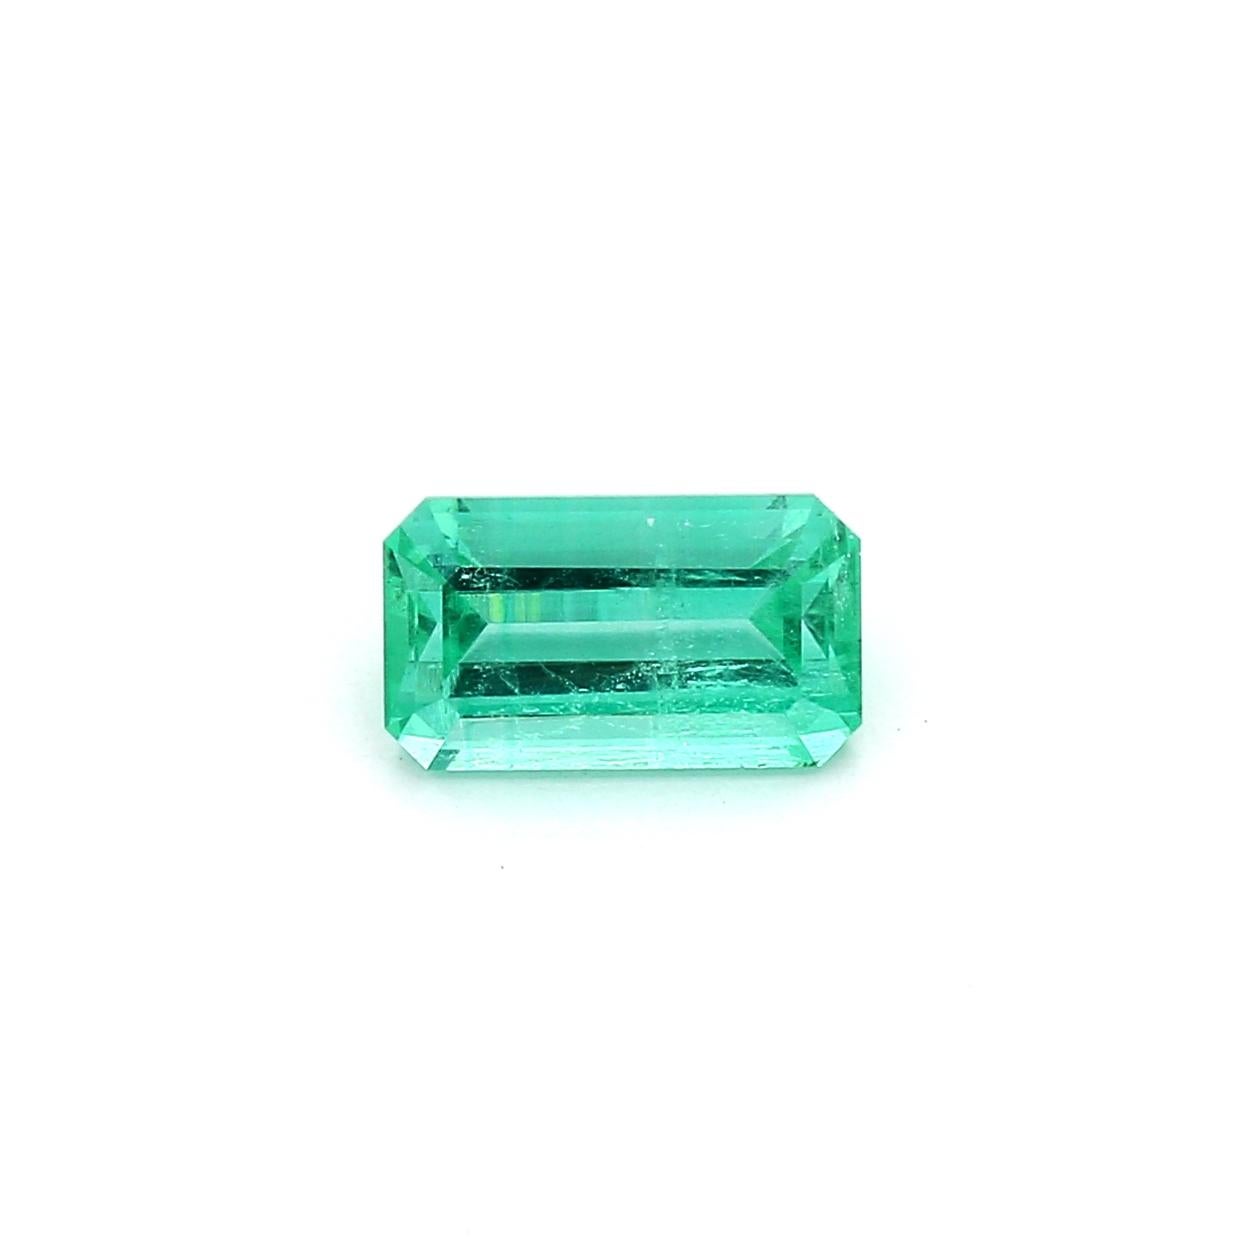 russian emerald price per carat